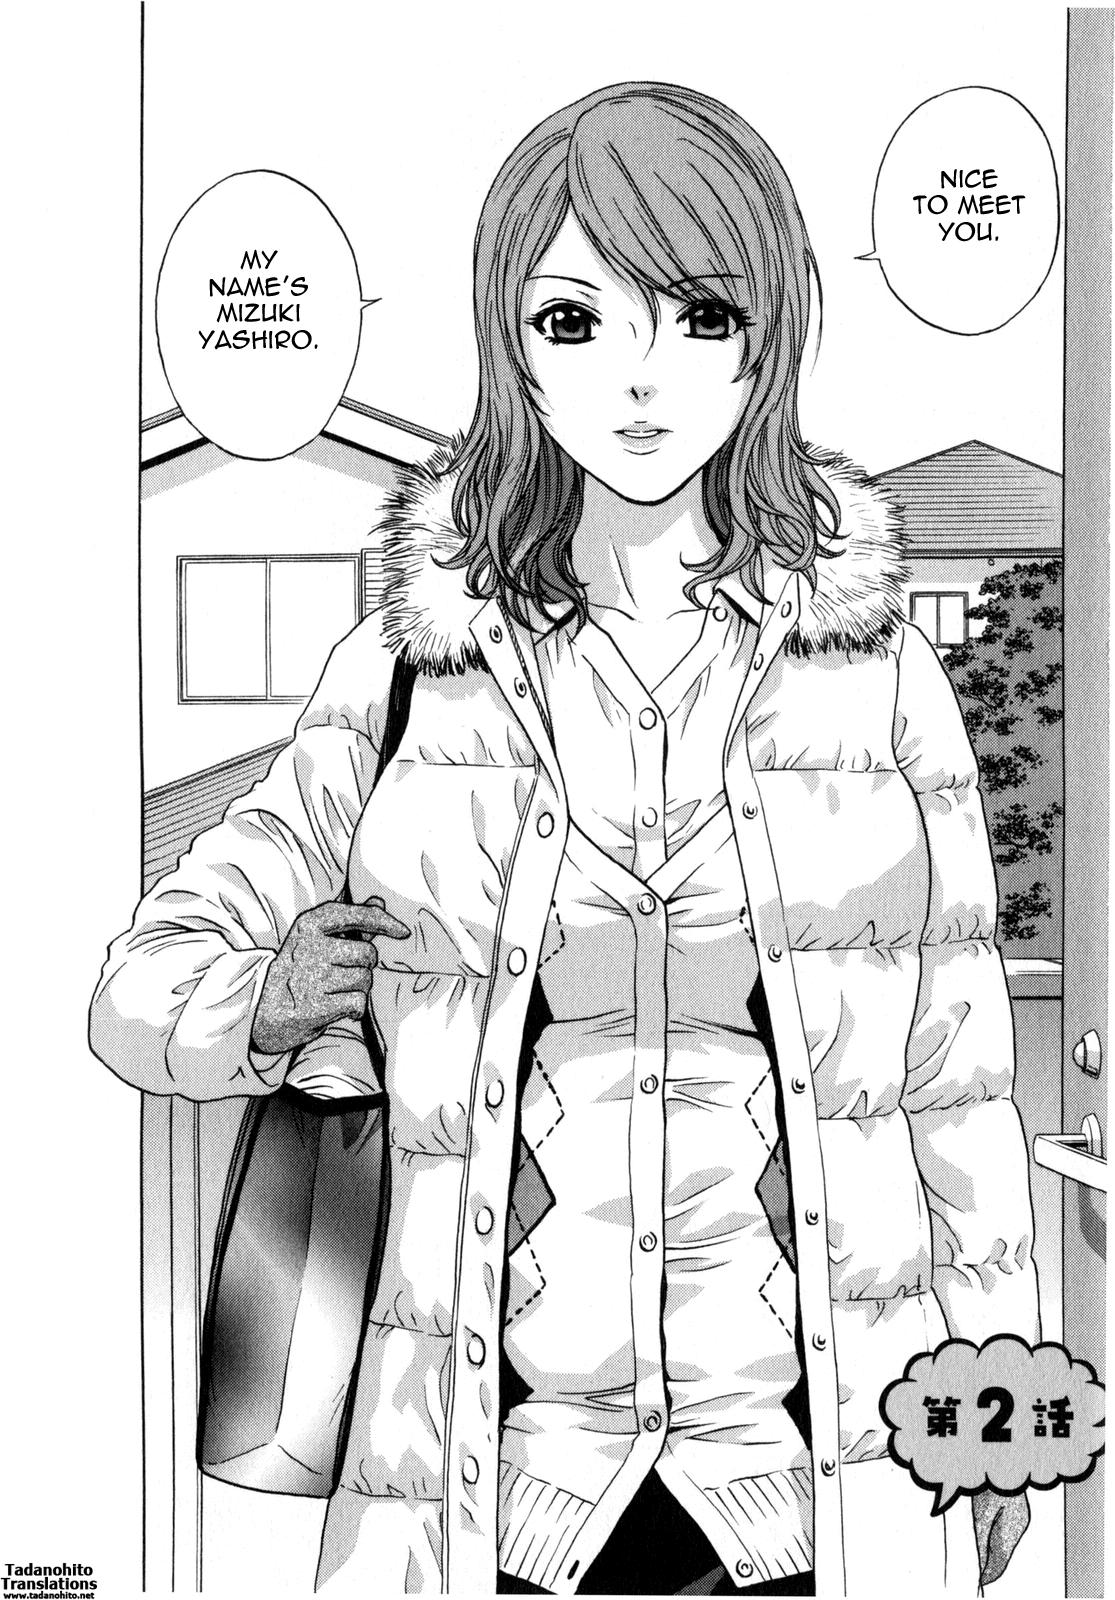 [Hidemaru] Life with Married Women Just Like a Manga 2 - Ch. 1-7 [English] {Tadanohito} 28